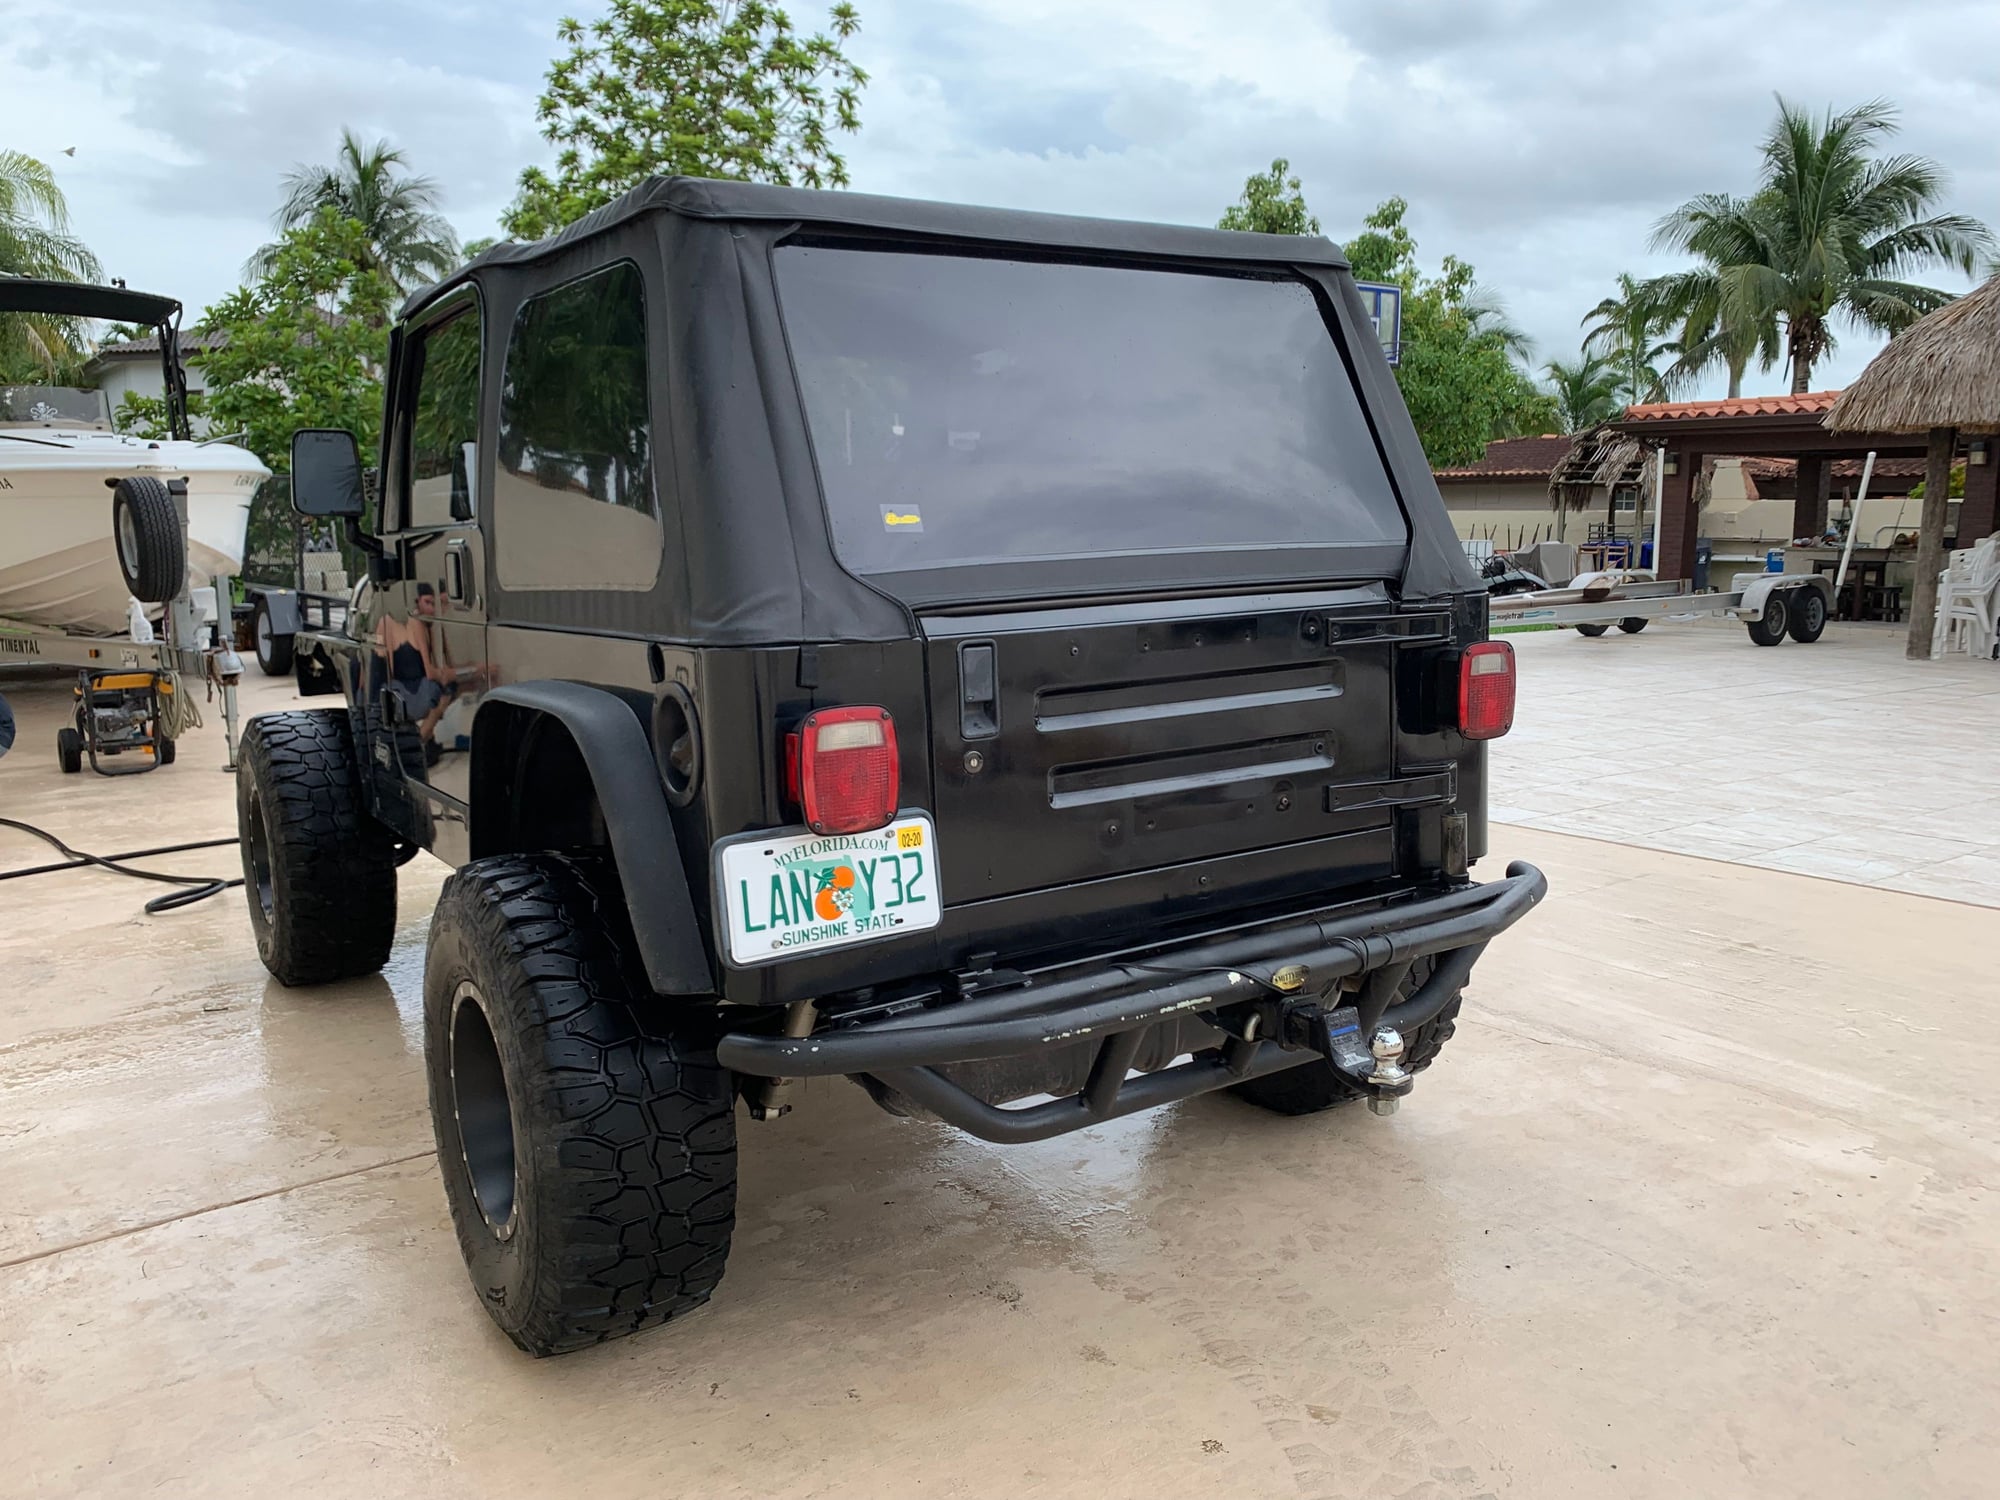 2002 Jeep TJ - 02 tj - Used - VIN 1J4FA49S52P751960 - 6 cyl - 4WD - Automatic - Black - Miami, FL 33165, United States